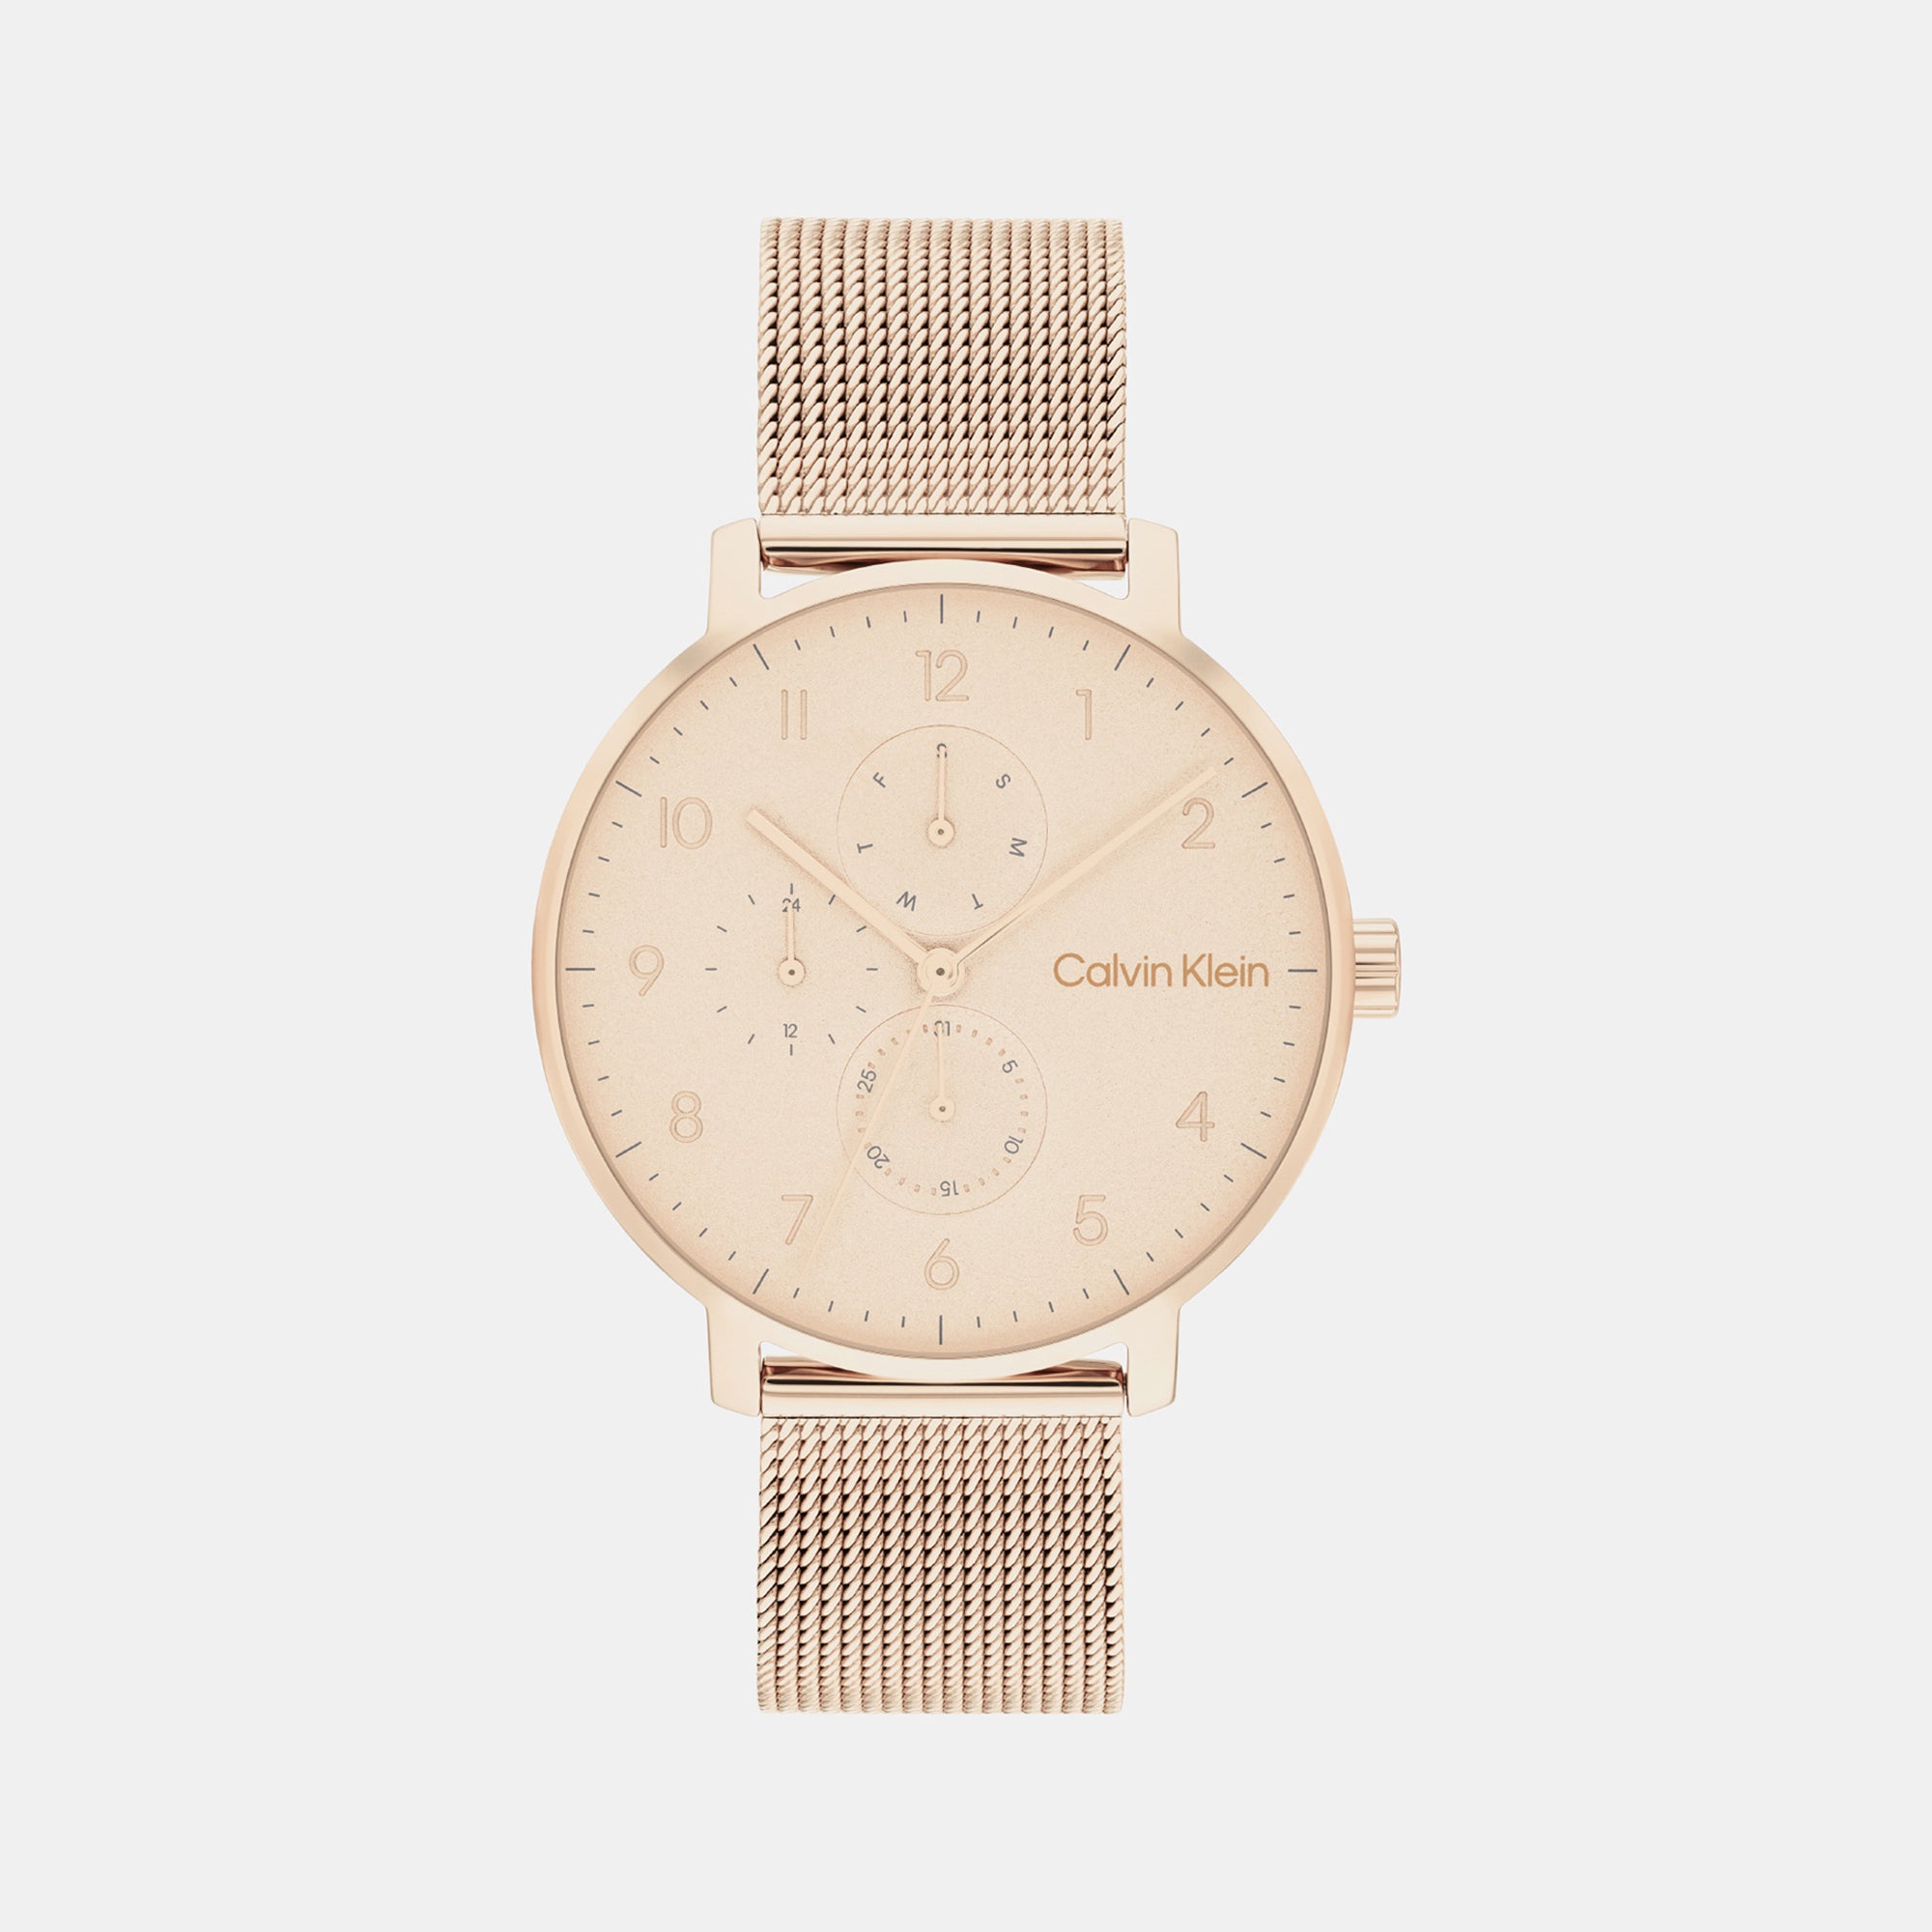 Calvin Klein CK K3G23526 Stately Gold Tone Watch for Women : Amazon.in:  Fashion